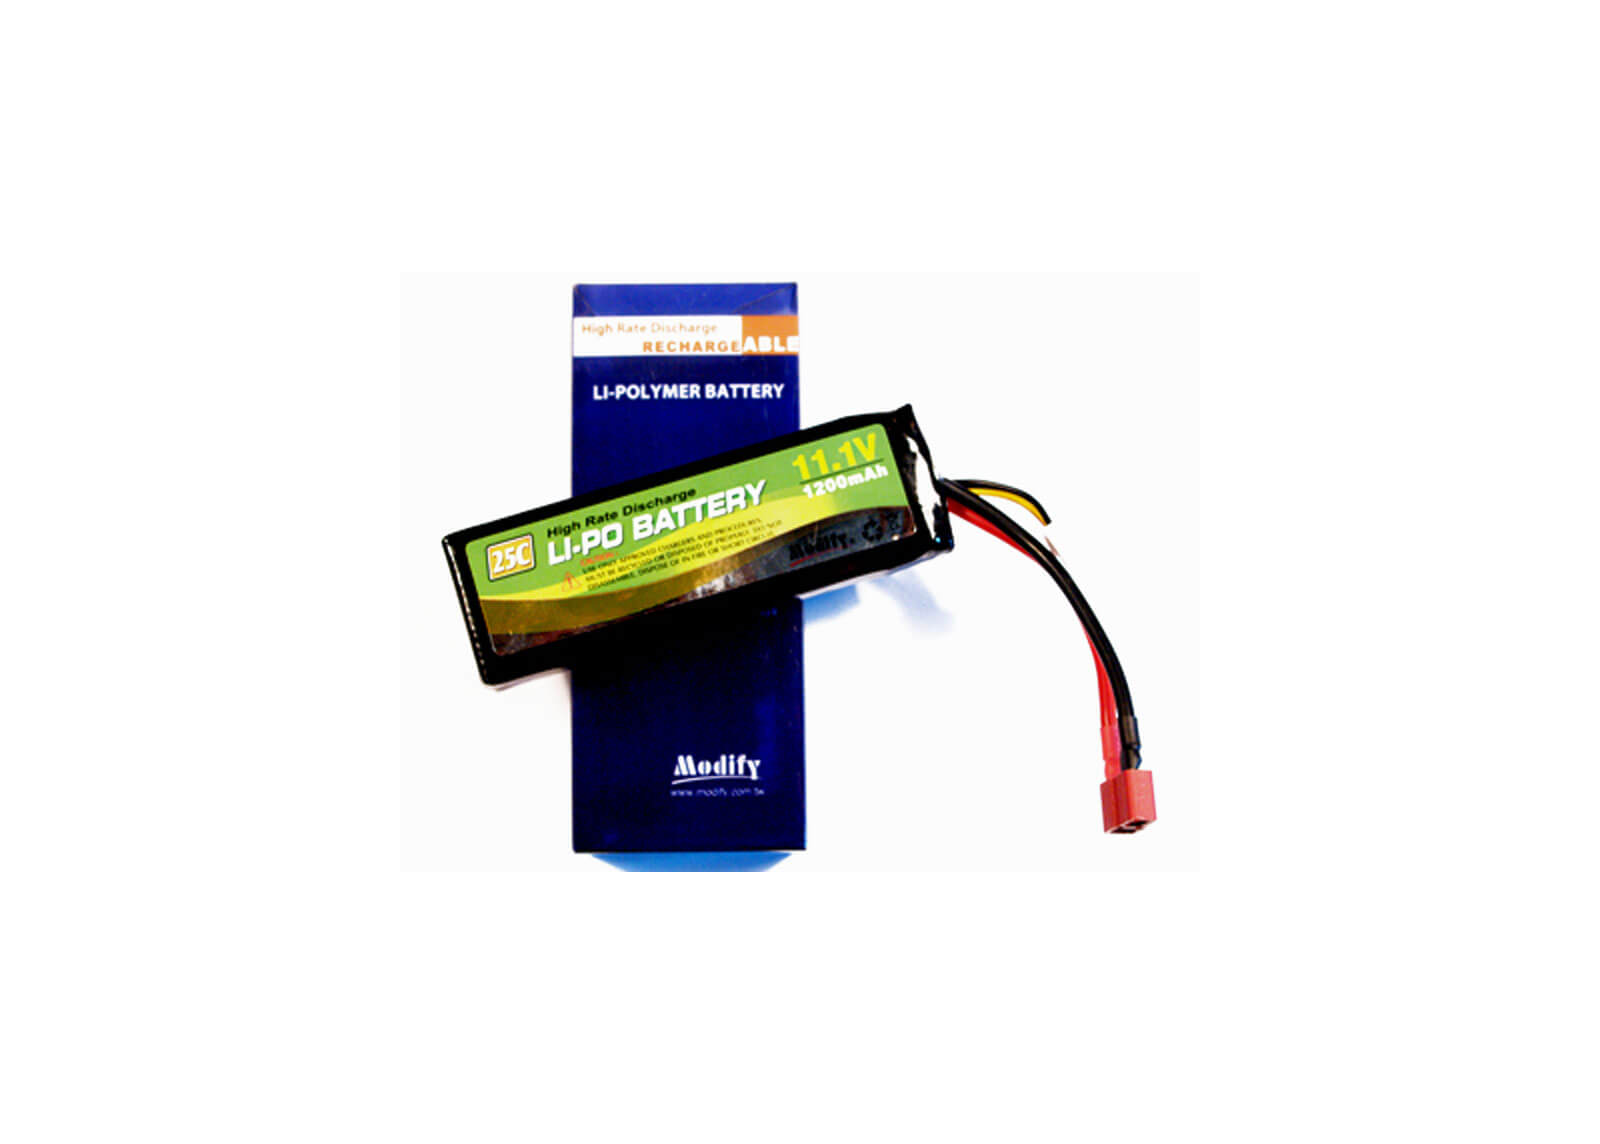 LiPo Airsoft Gun Battery Package 25C 11.1V 1200mAh-Modify Airsoft Accessories